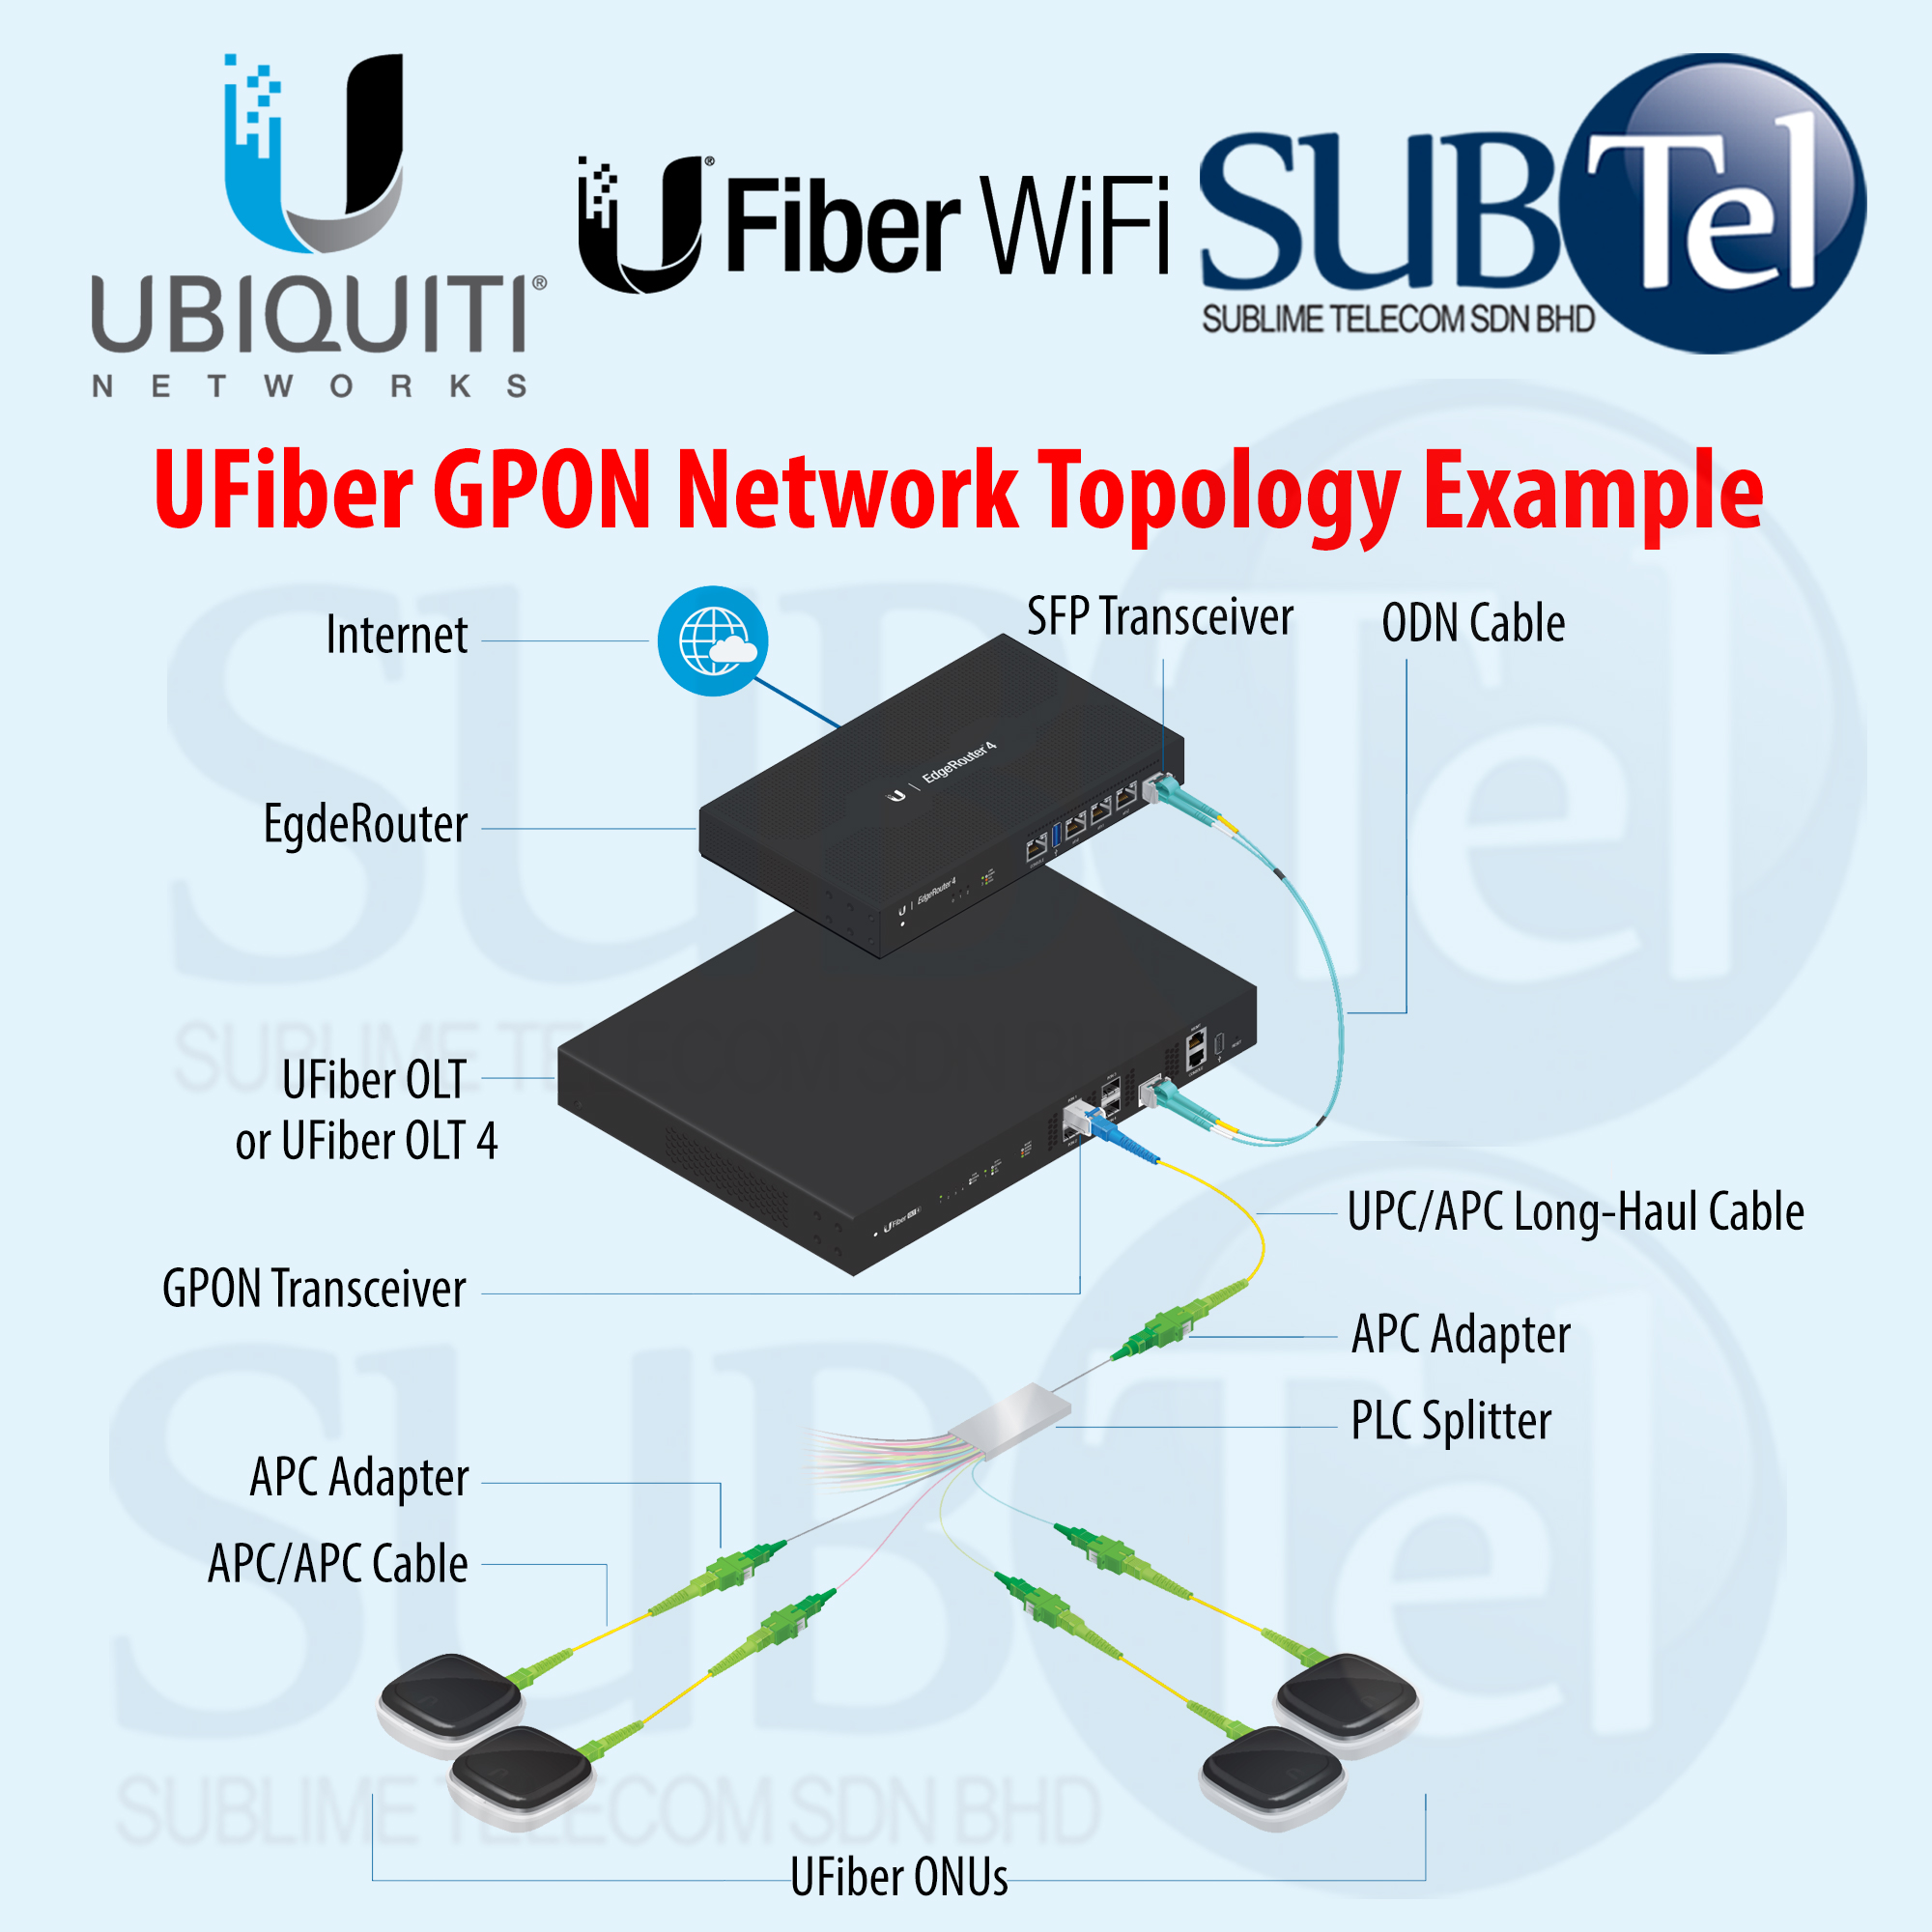 Ubiquiti Fiber UF-WIFI 4 Port GPON ONU Router WiFi CPE Gigabit ONT OLT